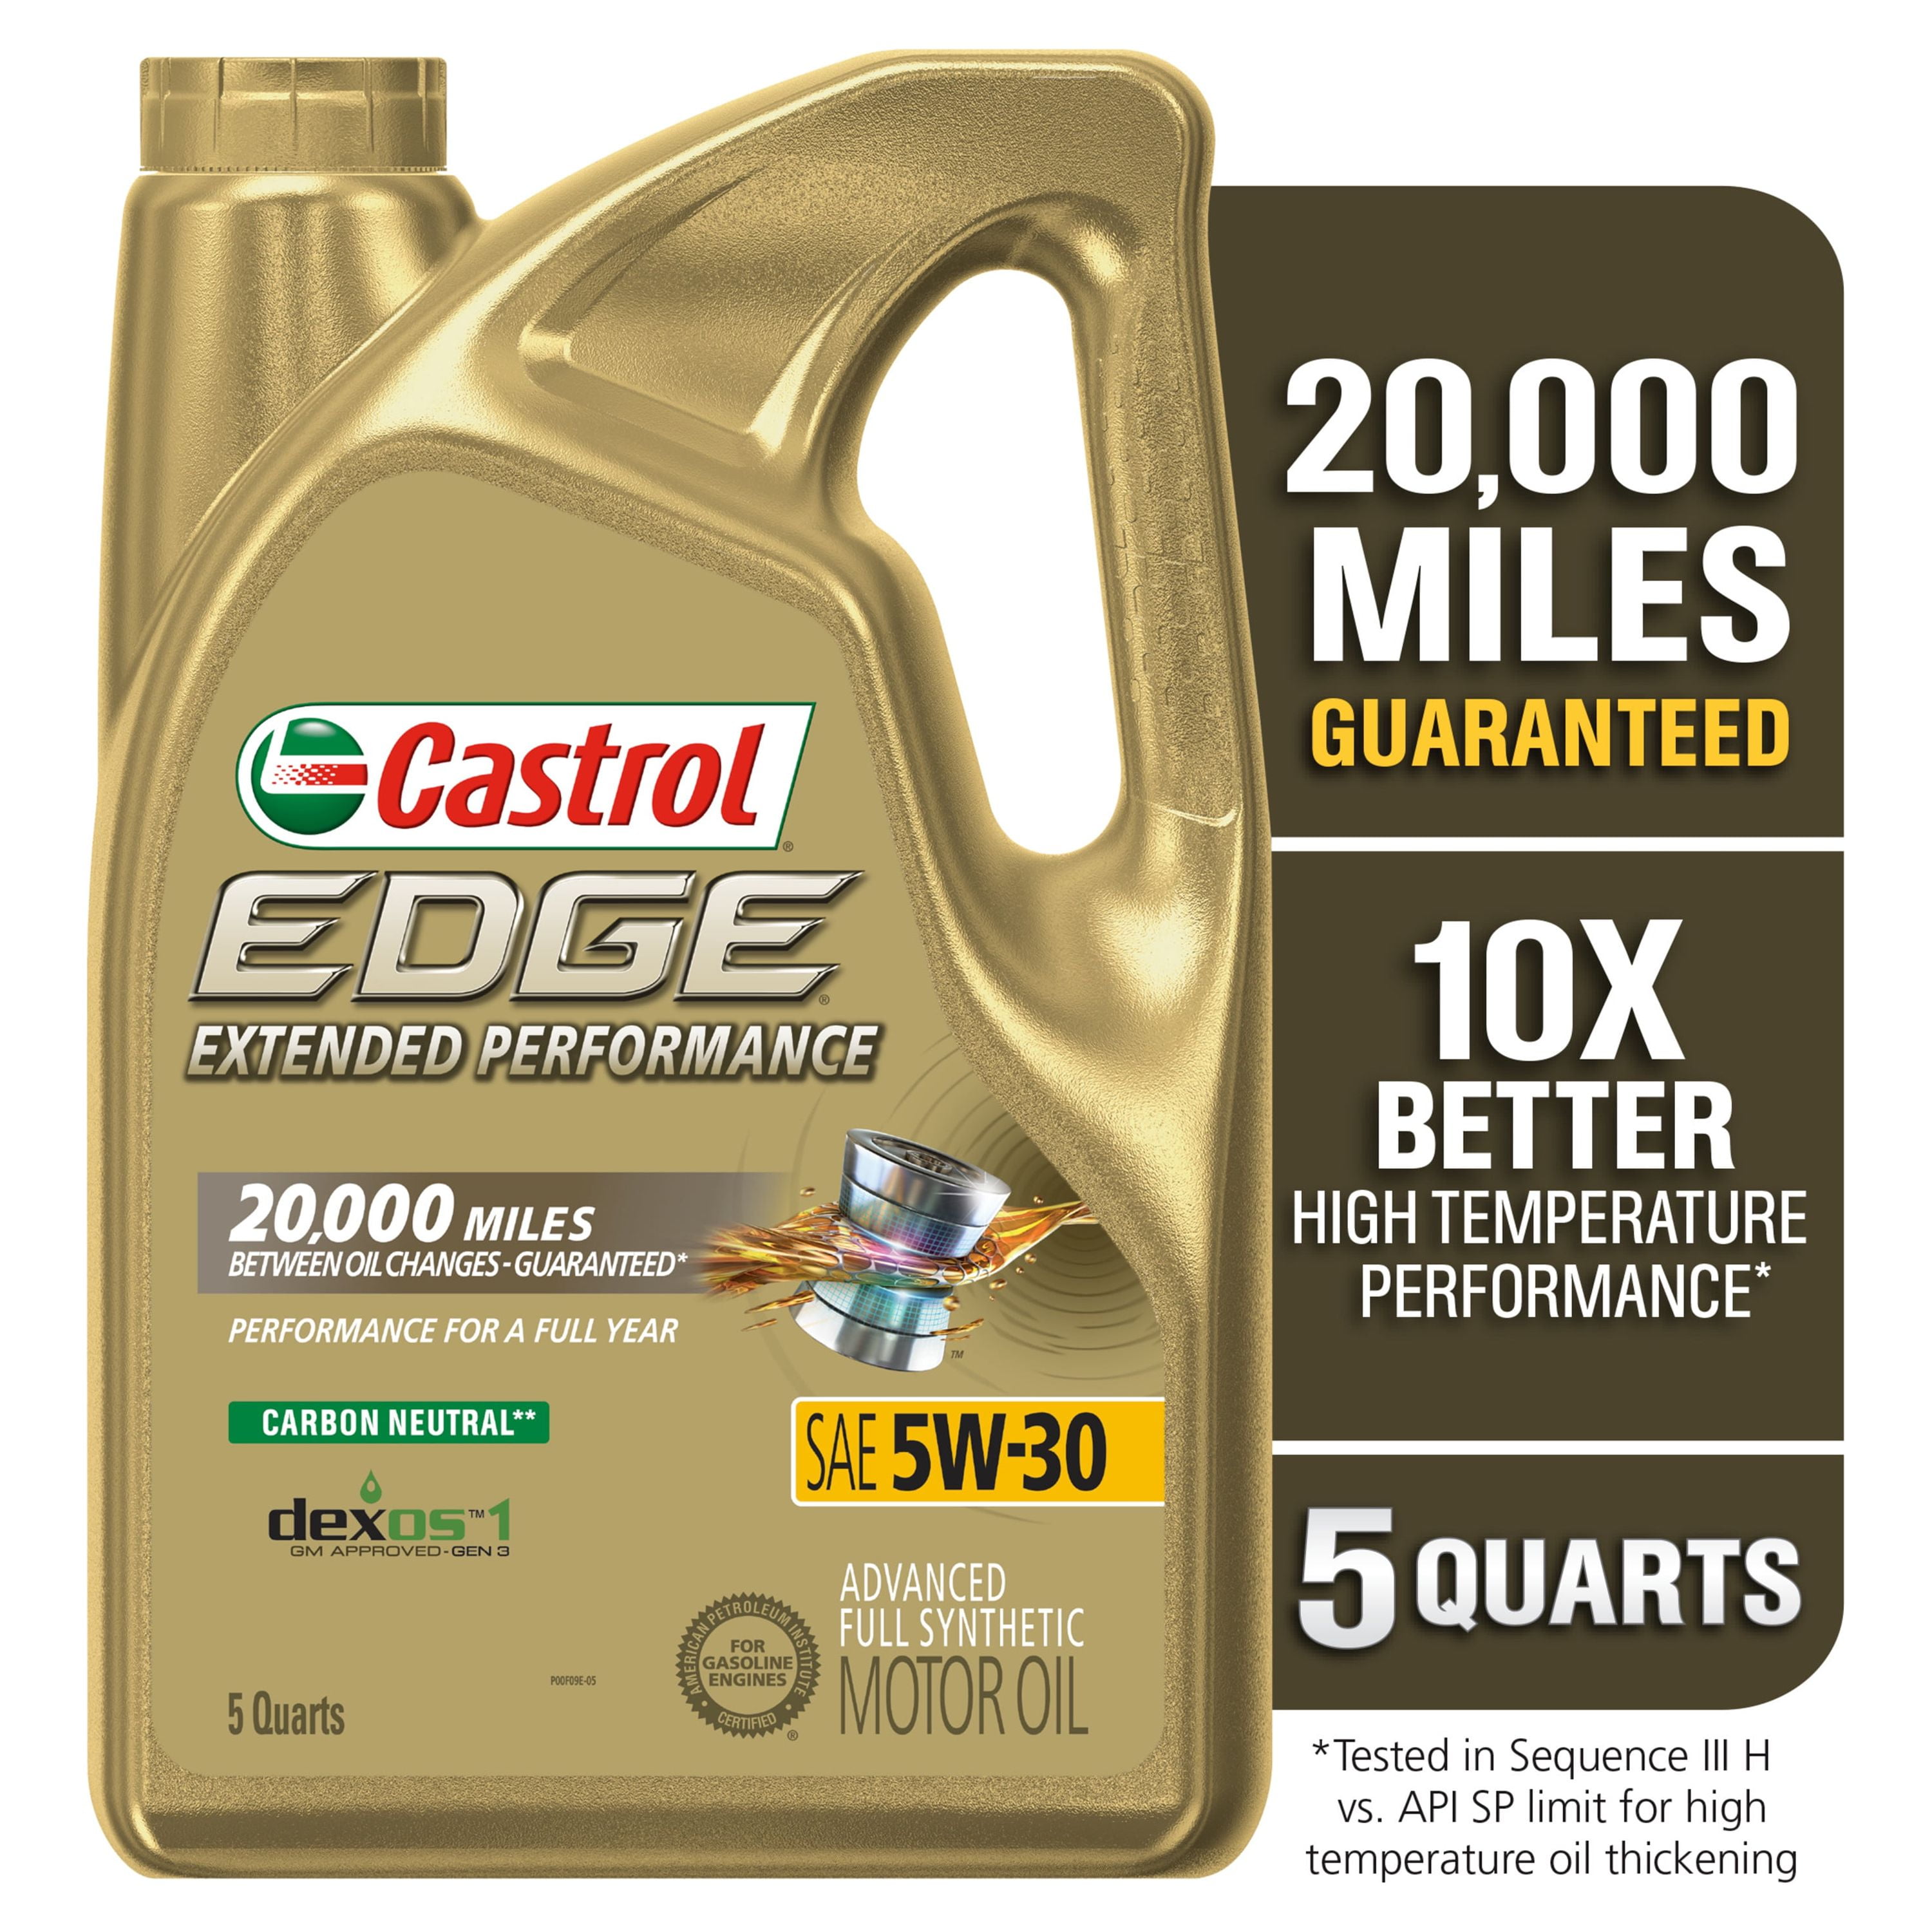 Castrol Edge 5W-30 LL Motor Oil, Advanced Full Synthetic, 5 Quarts